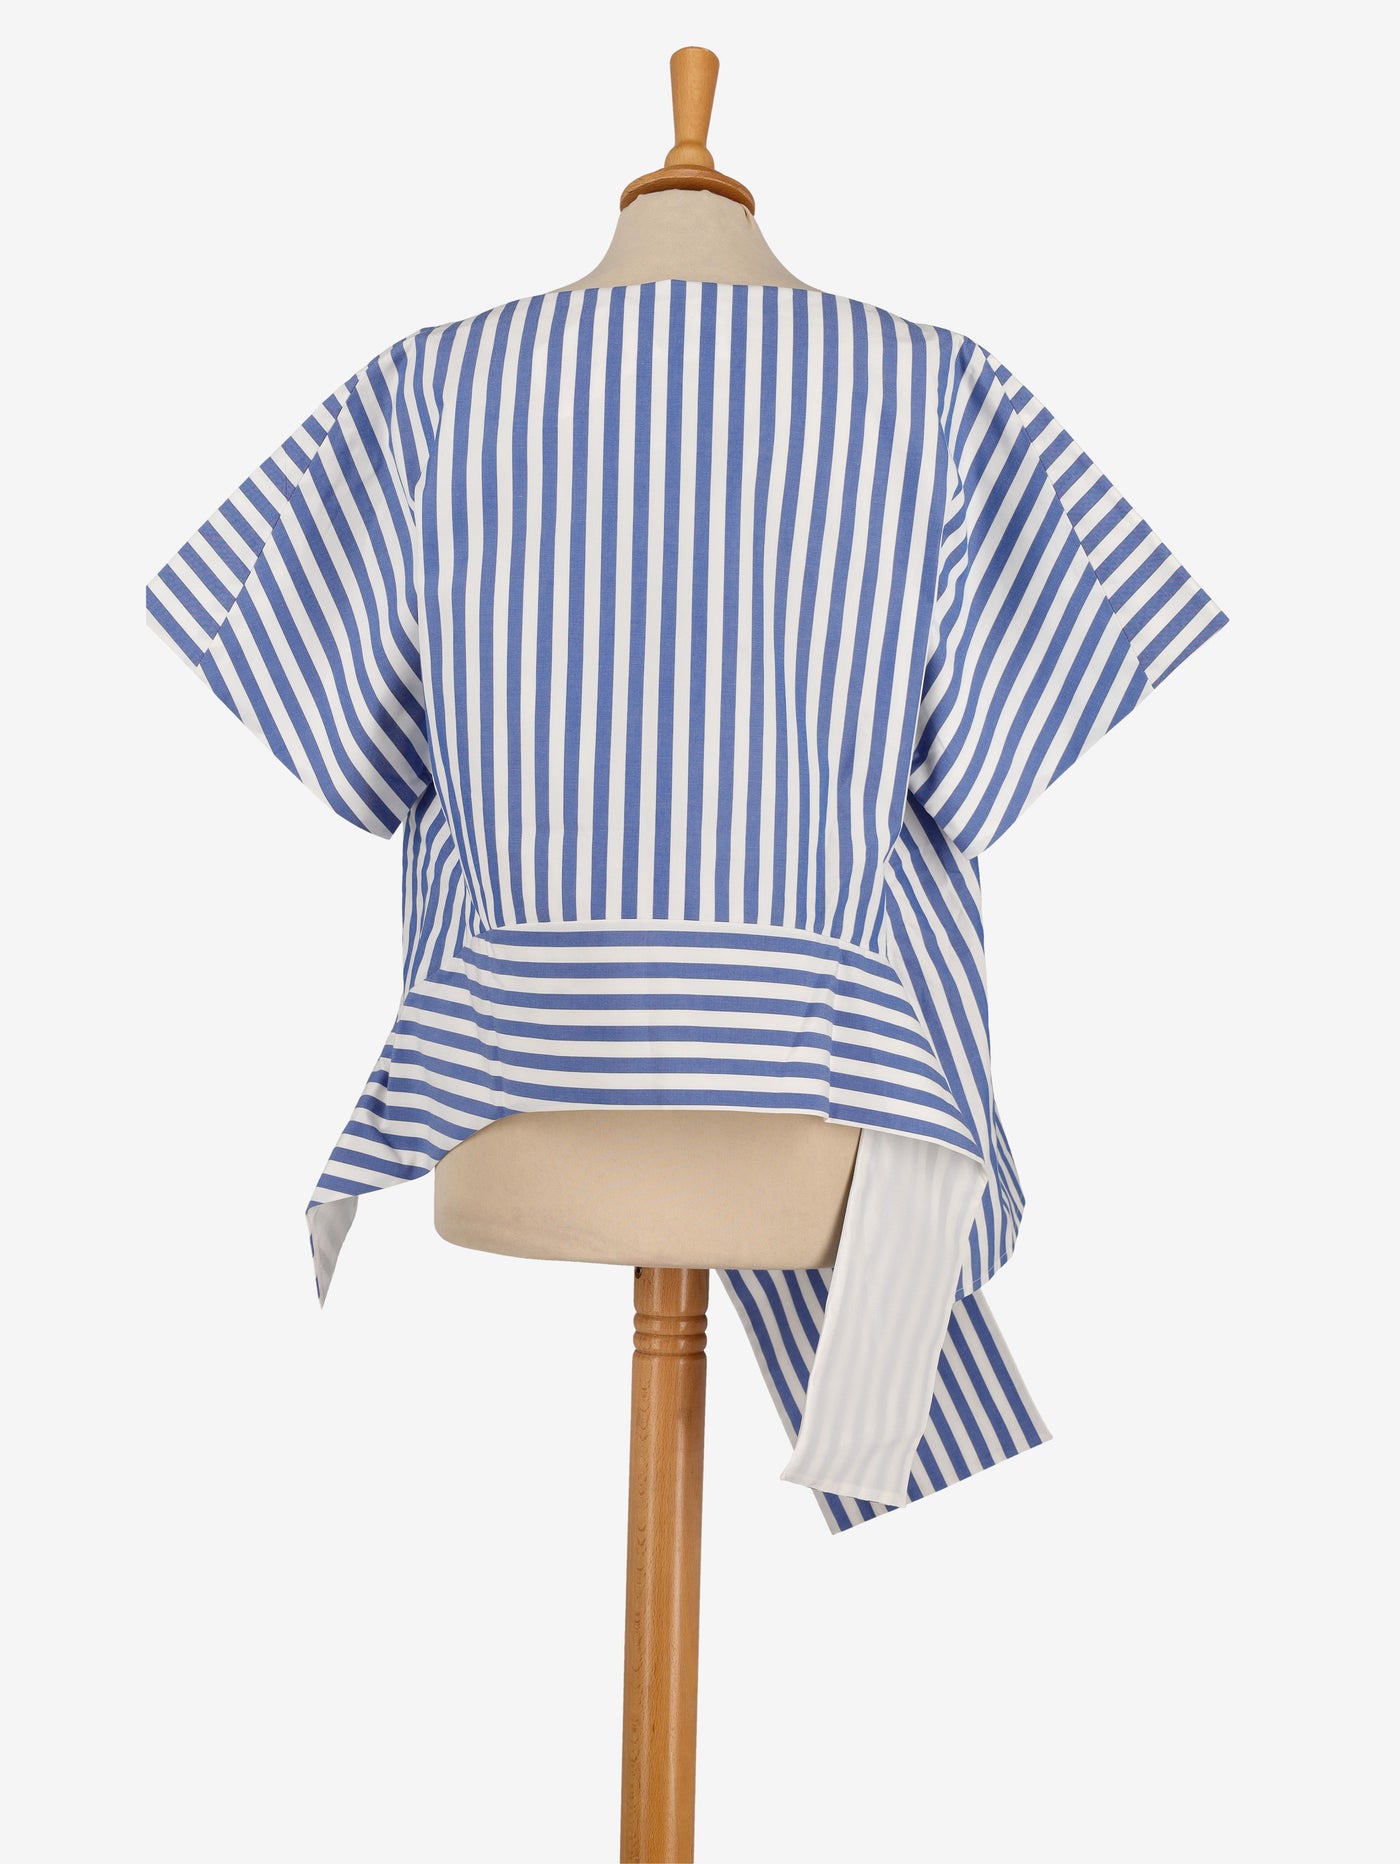 Celine Oversize Striped Shirt - 00s